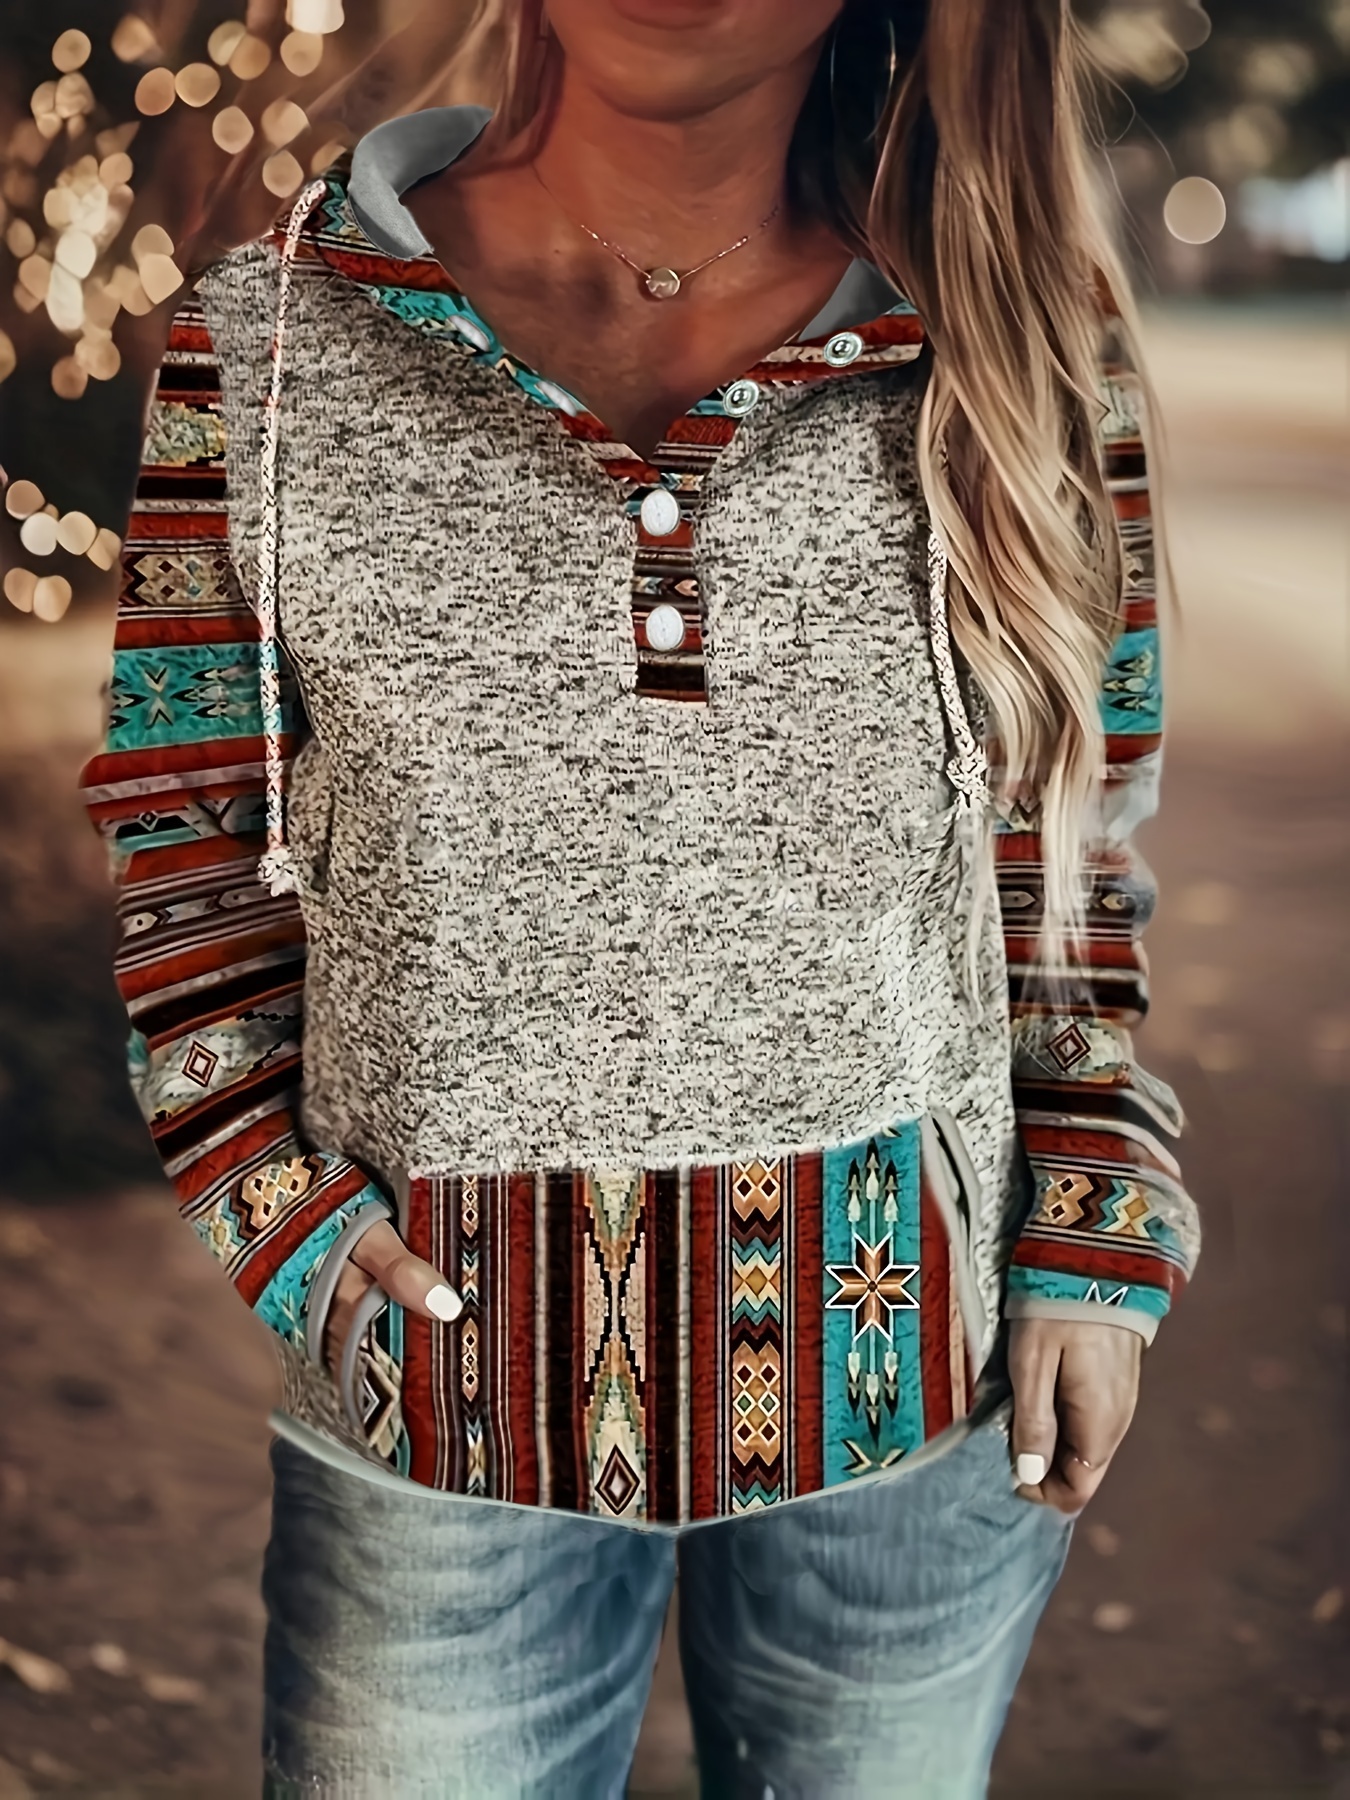 Women's Geometric Horse Print Aztec Hoodie Pullover Cowgirl Western Ethnic  Style Printed Hooded Sweatshirt 